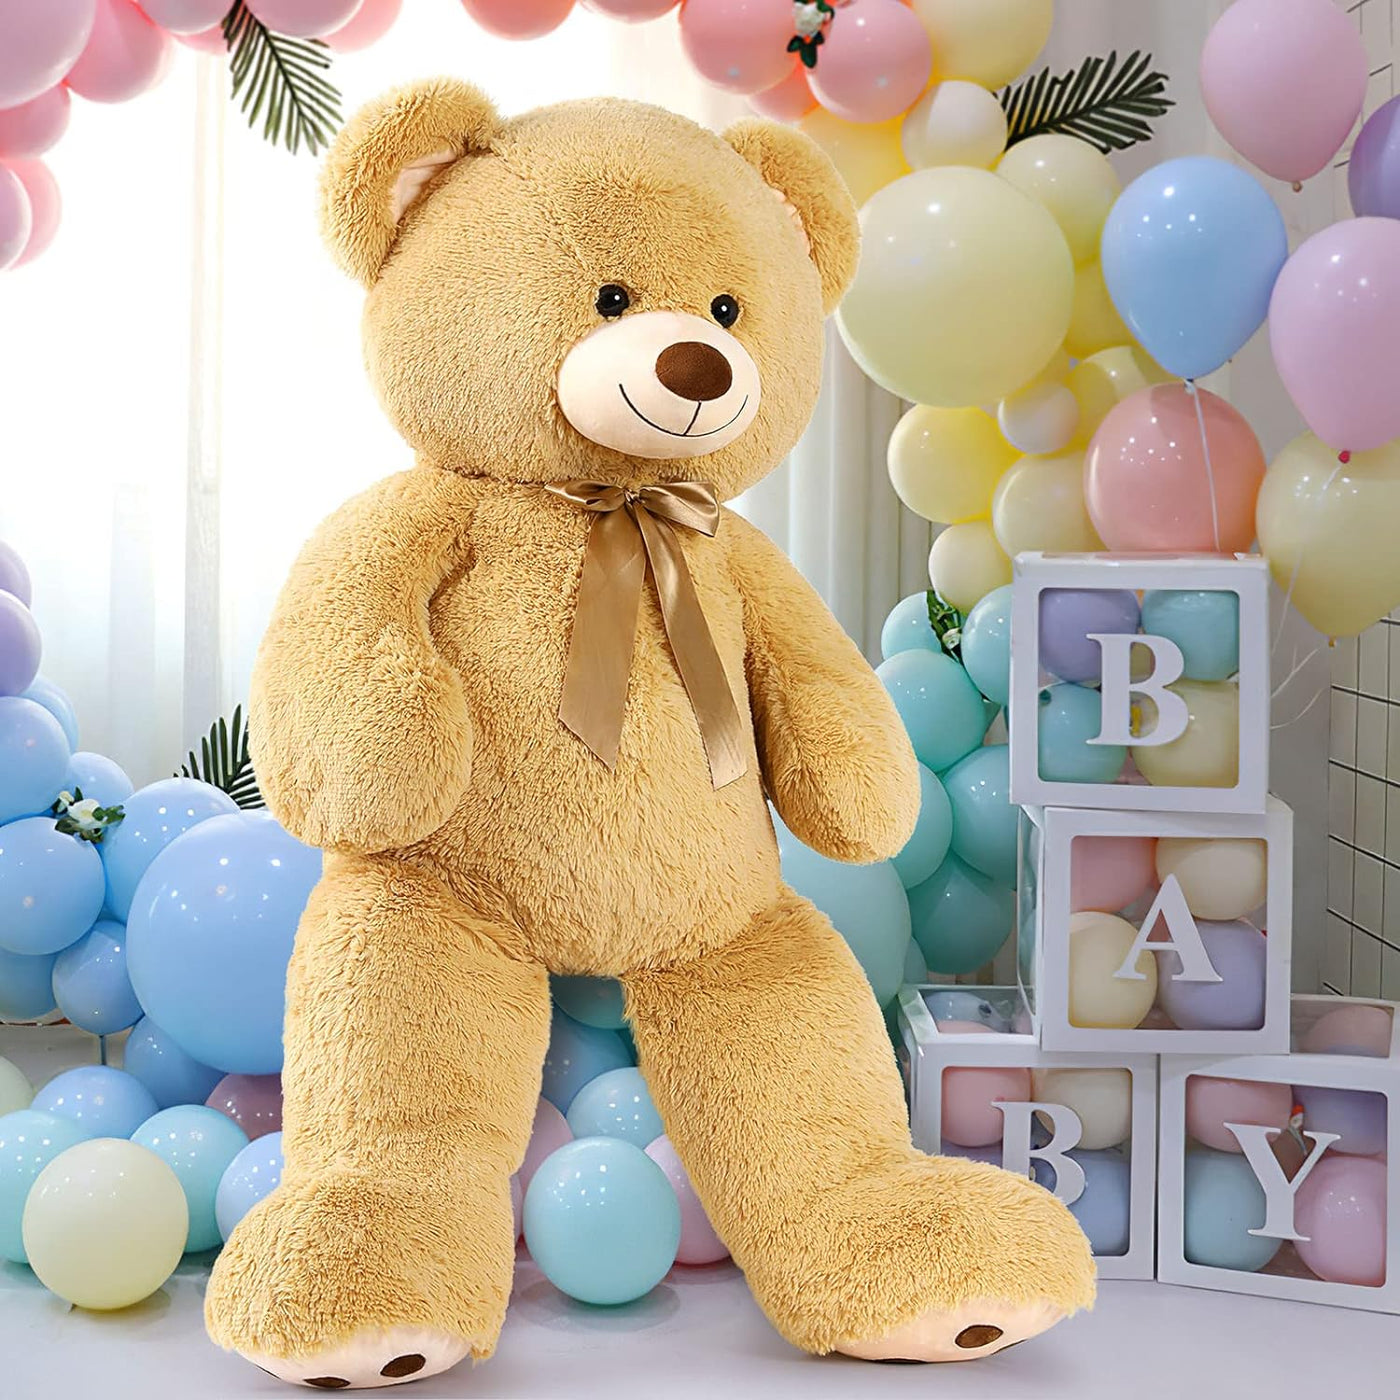 MorisMos Giant Teddy Bear Stuffed Animal 4ft, Big Teddy Bear Plush